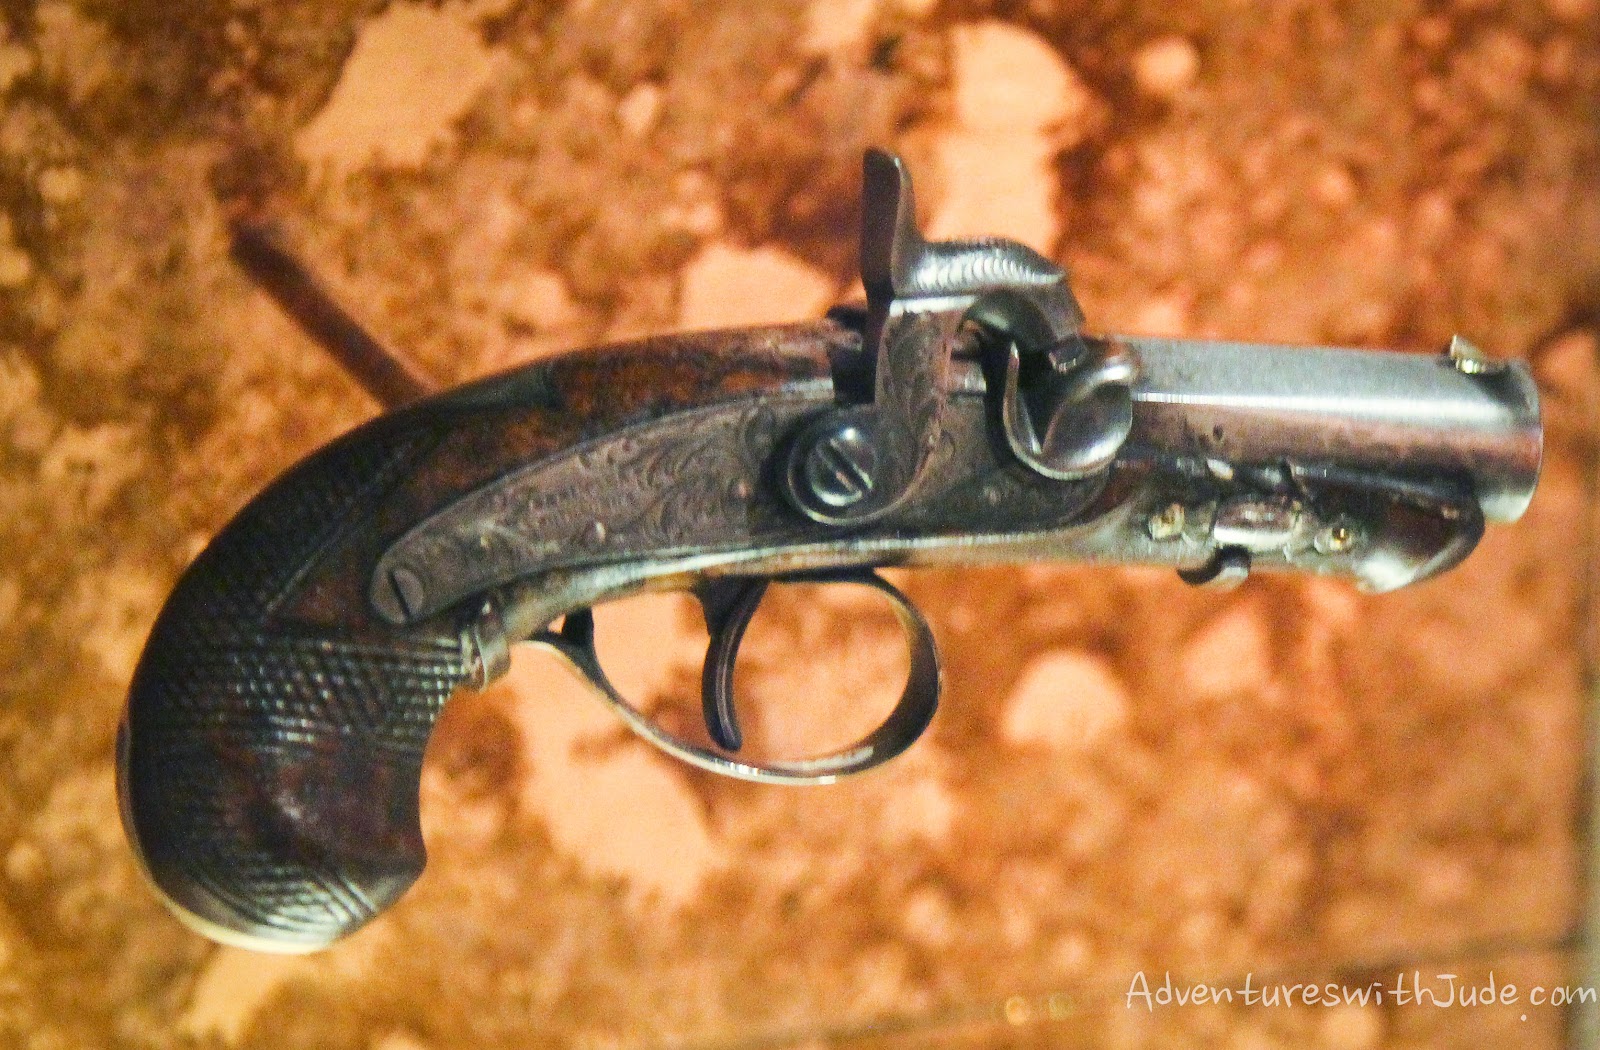 Pistol assassinated Abraham Lincoln